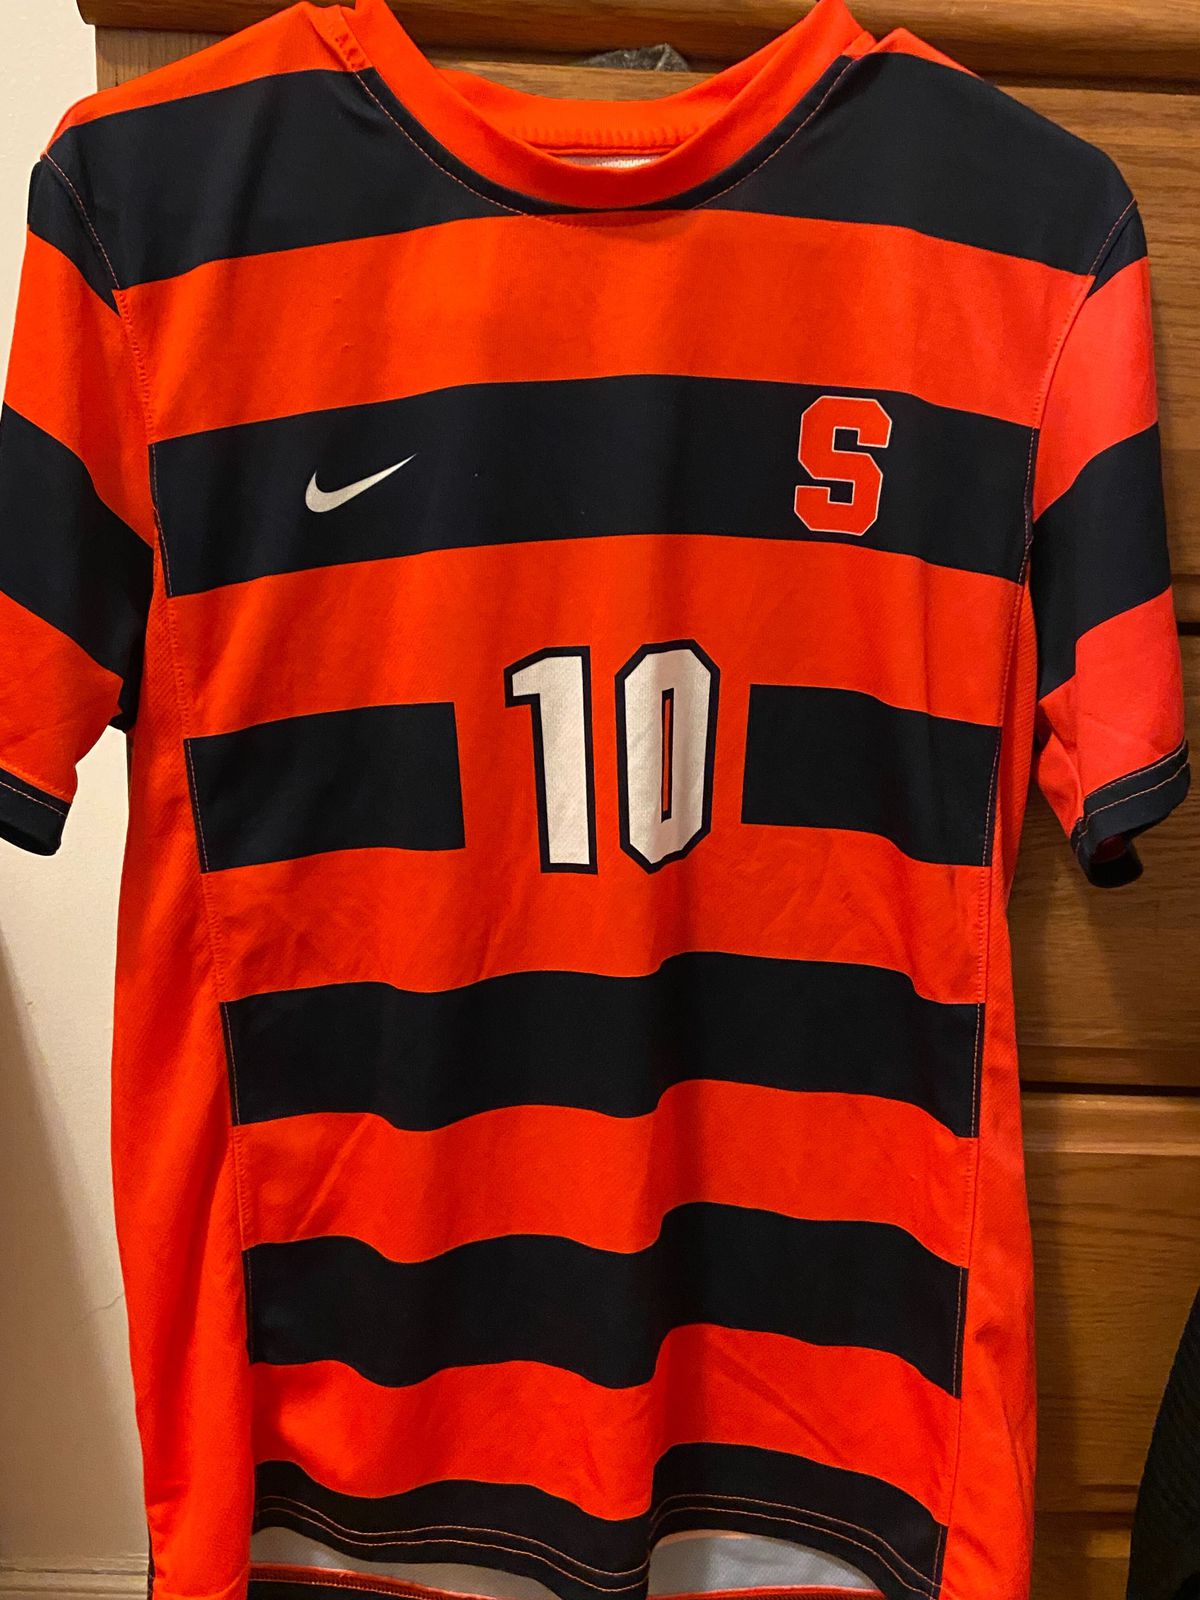 Syracuse Men’s Soccer #10 Jersey